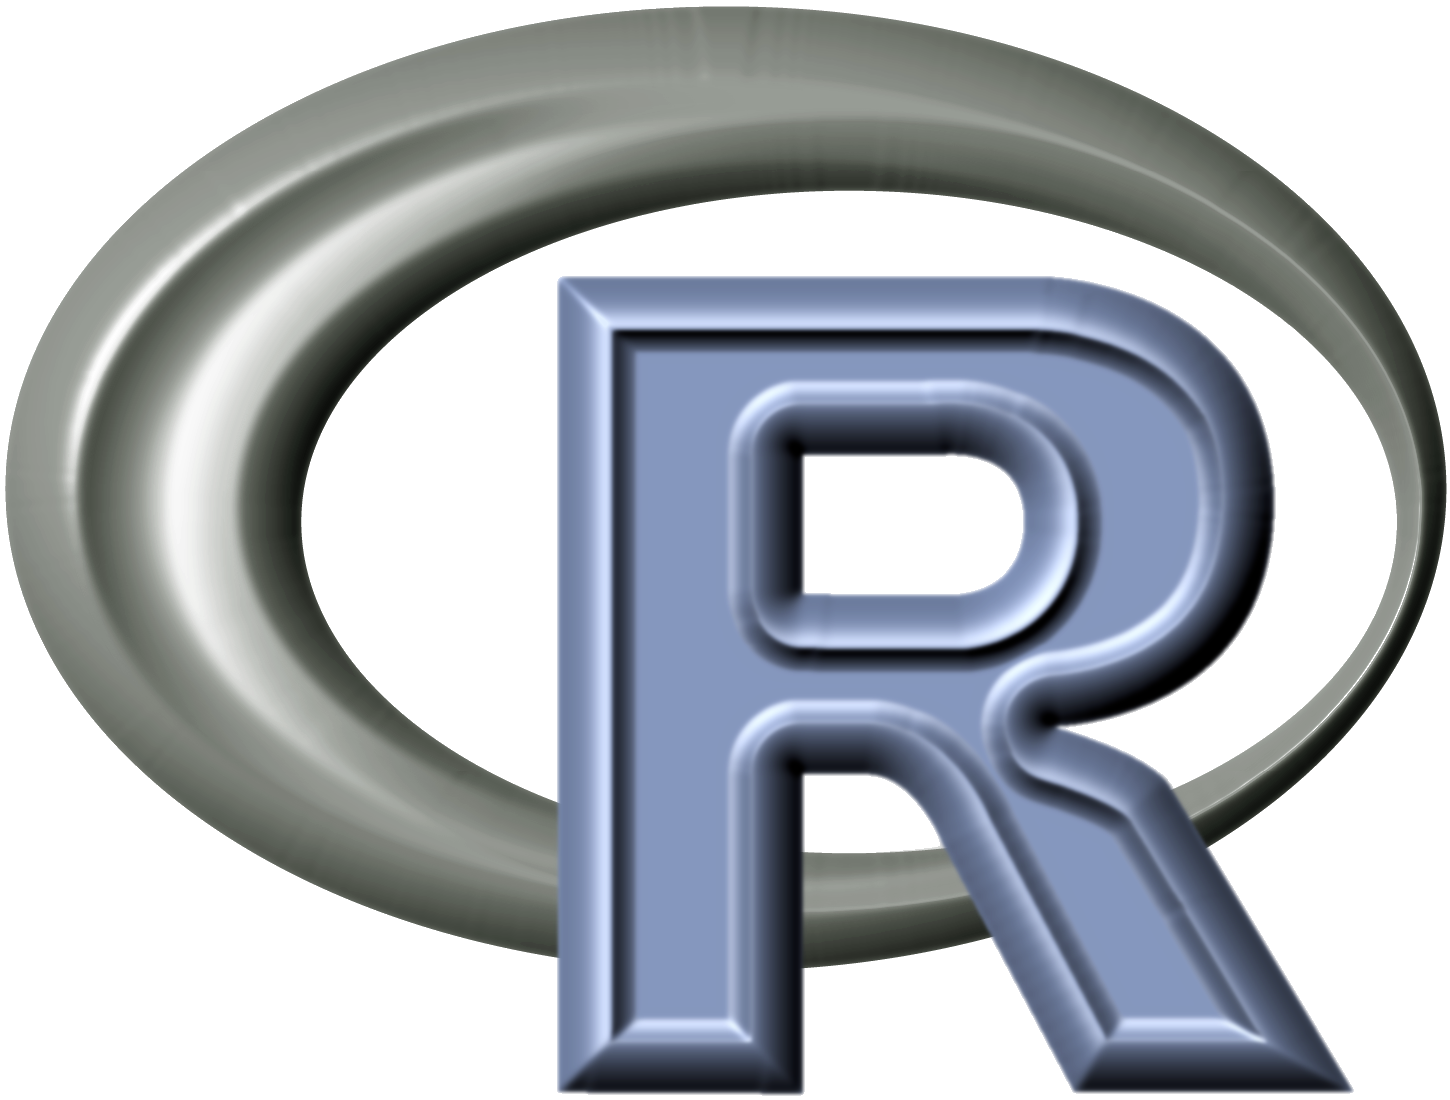 rstudio logo